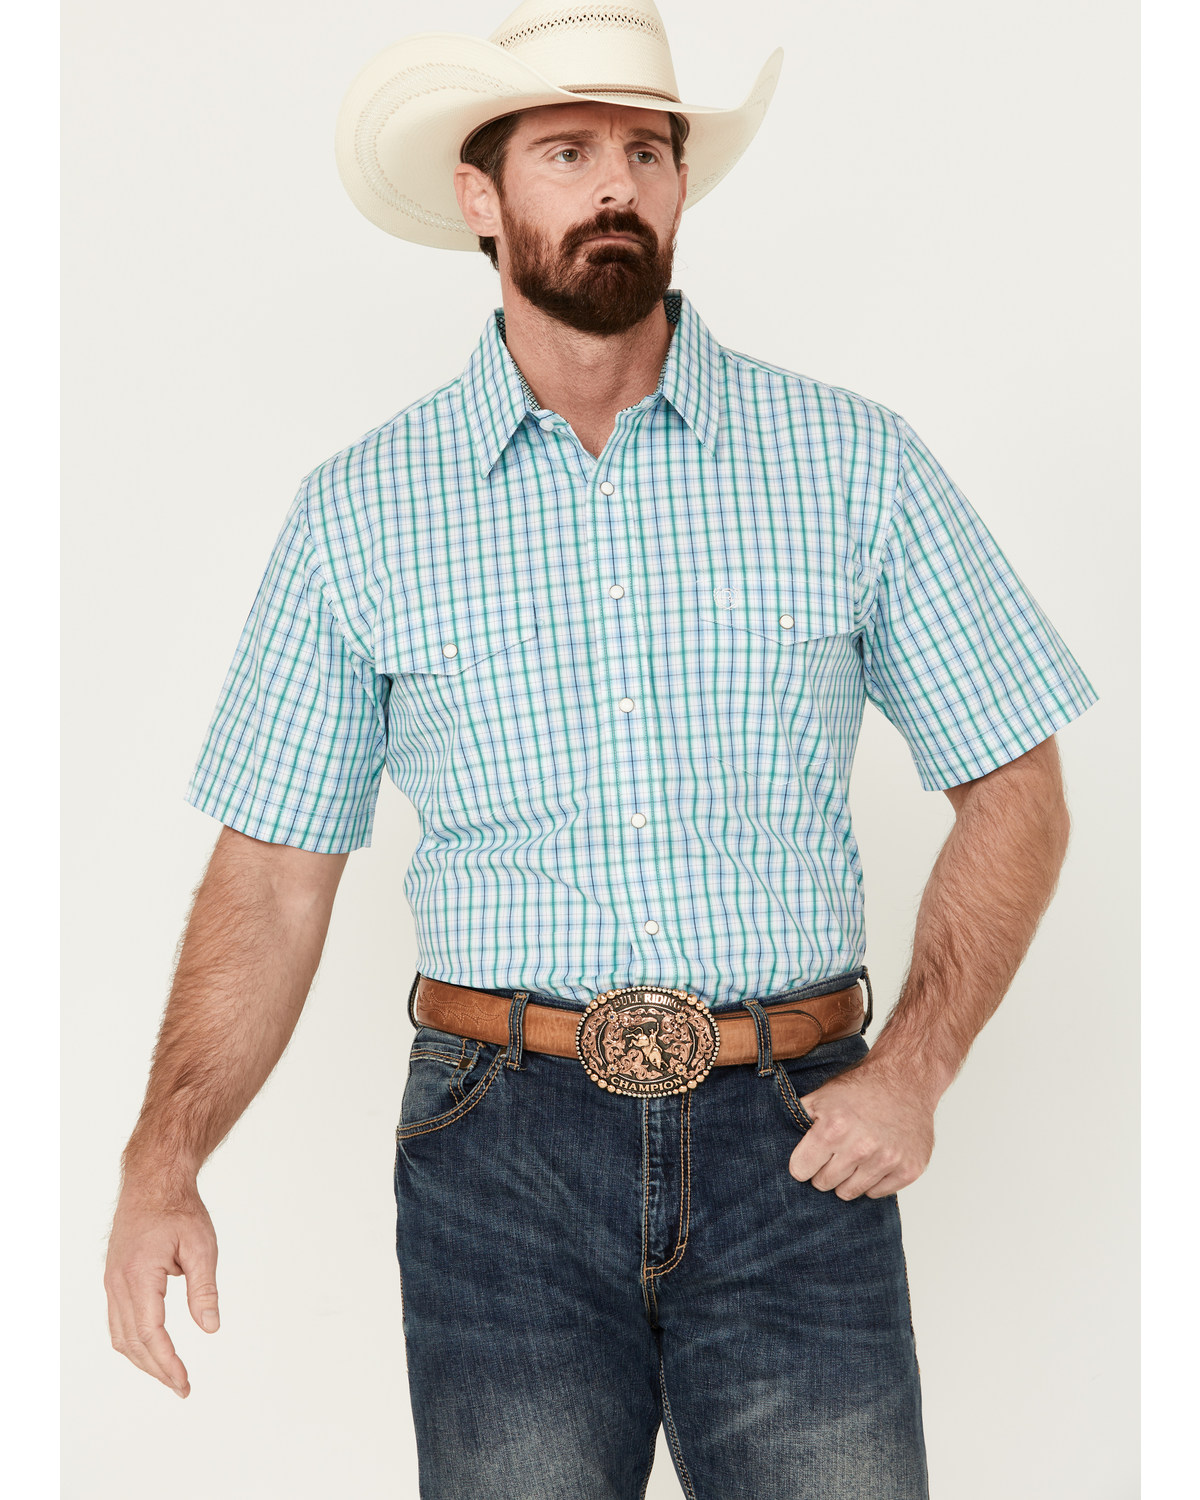 Panhandle Men's Plaid Print Short Sleeve Pearl Snap Western Shirt